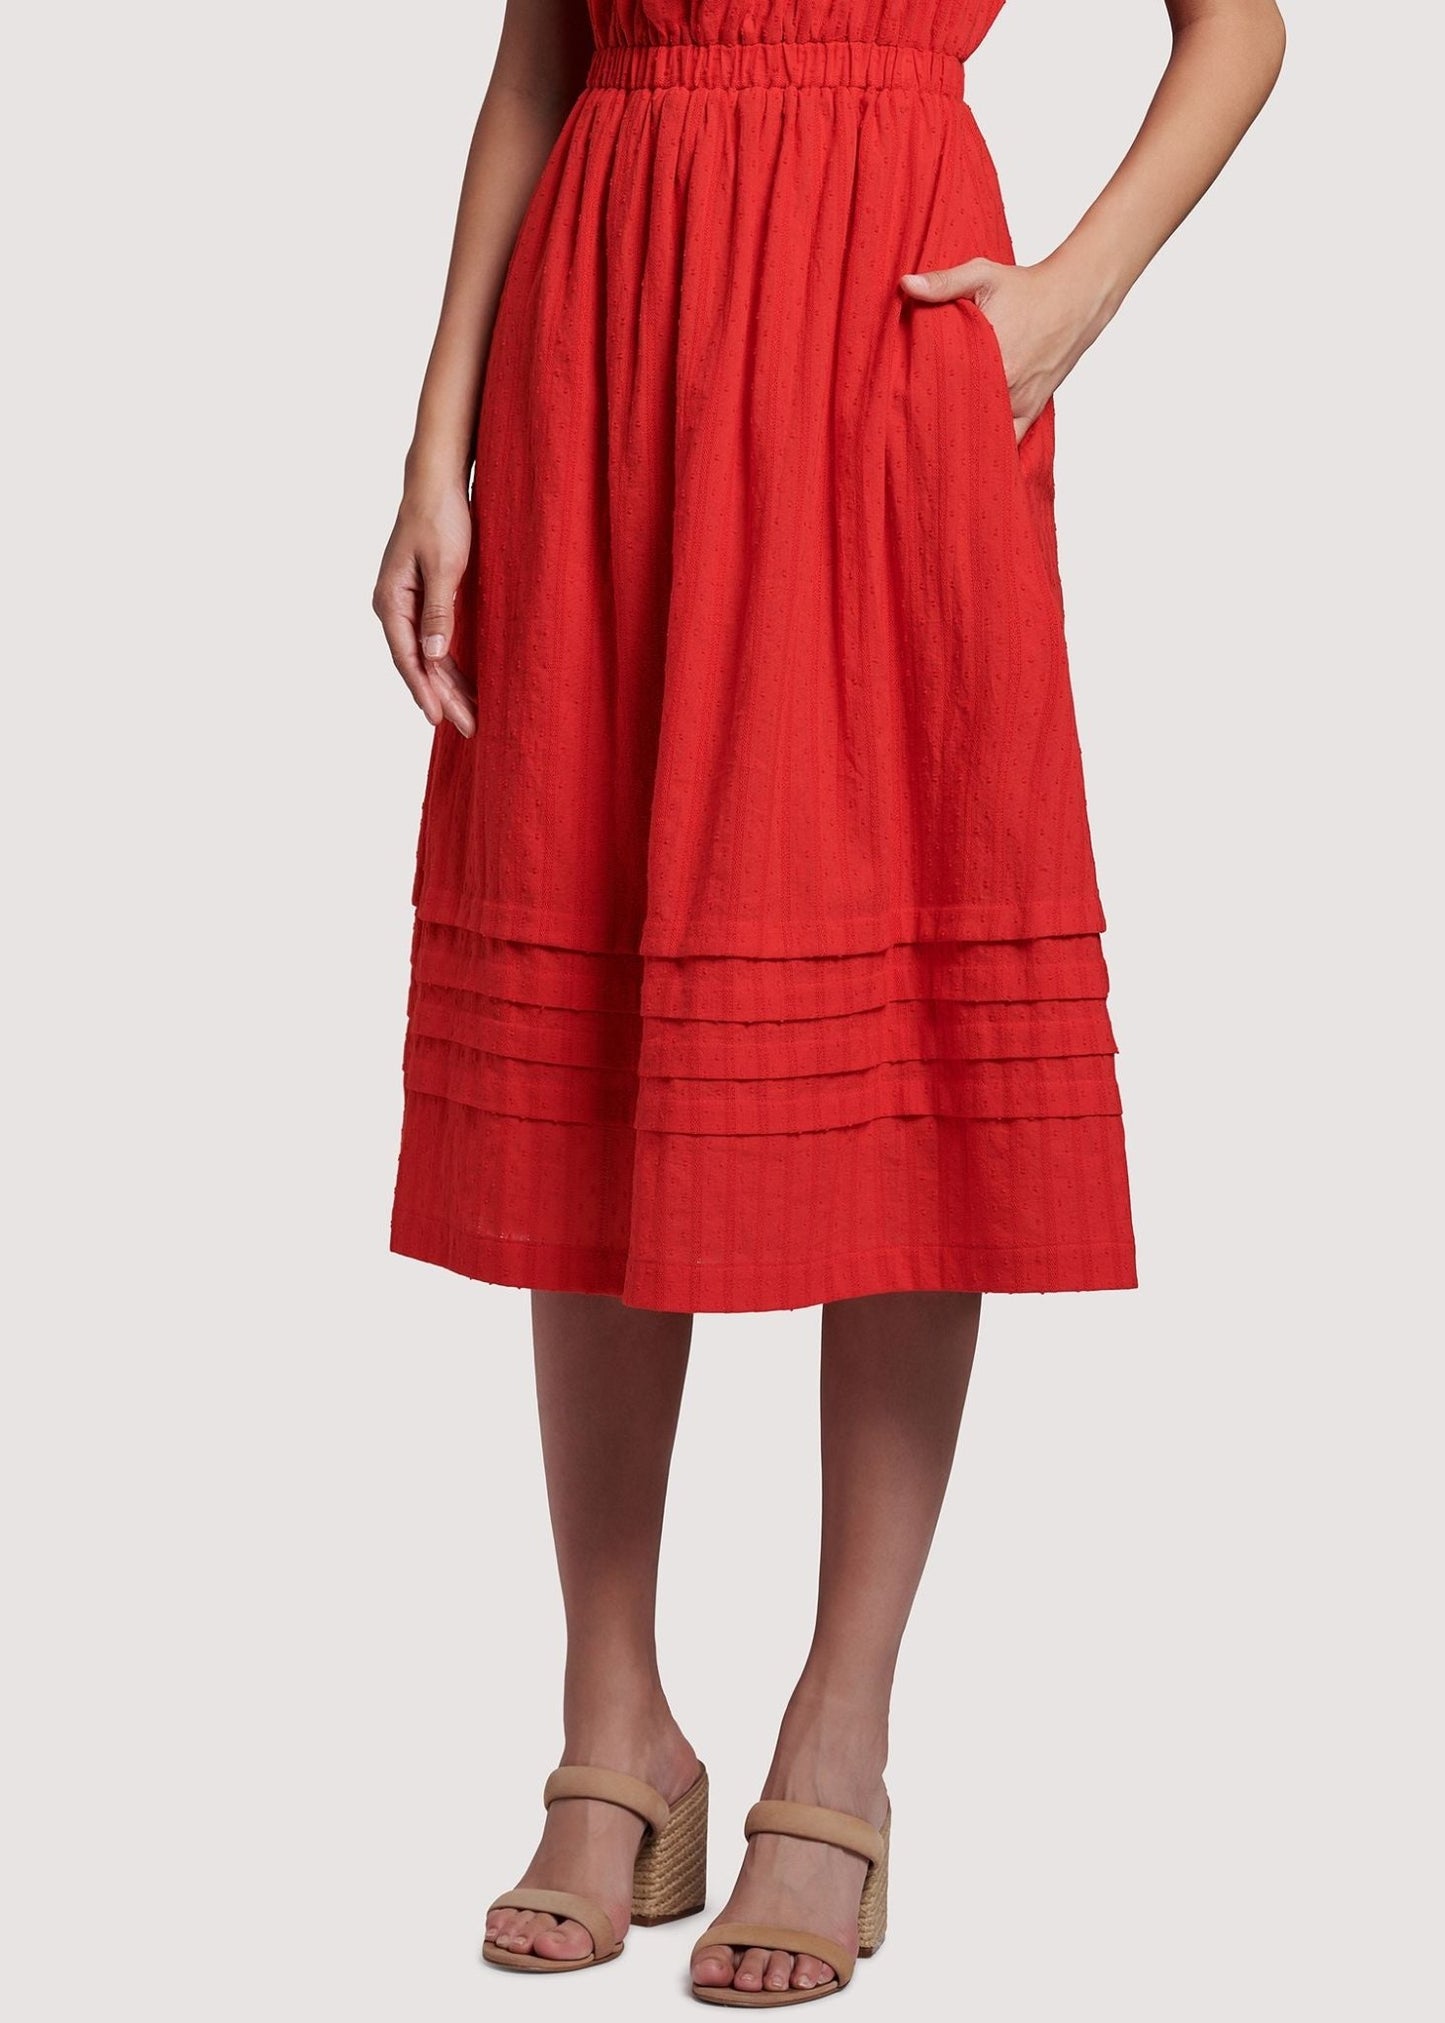 Strawberry Midi Dress - Addie Rose Boutique - Austin